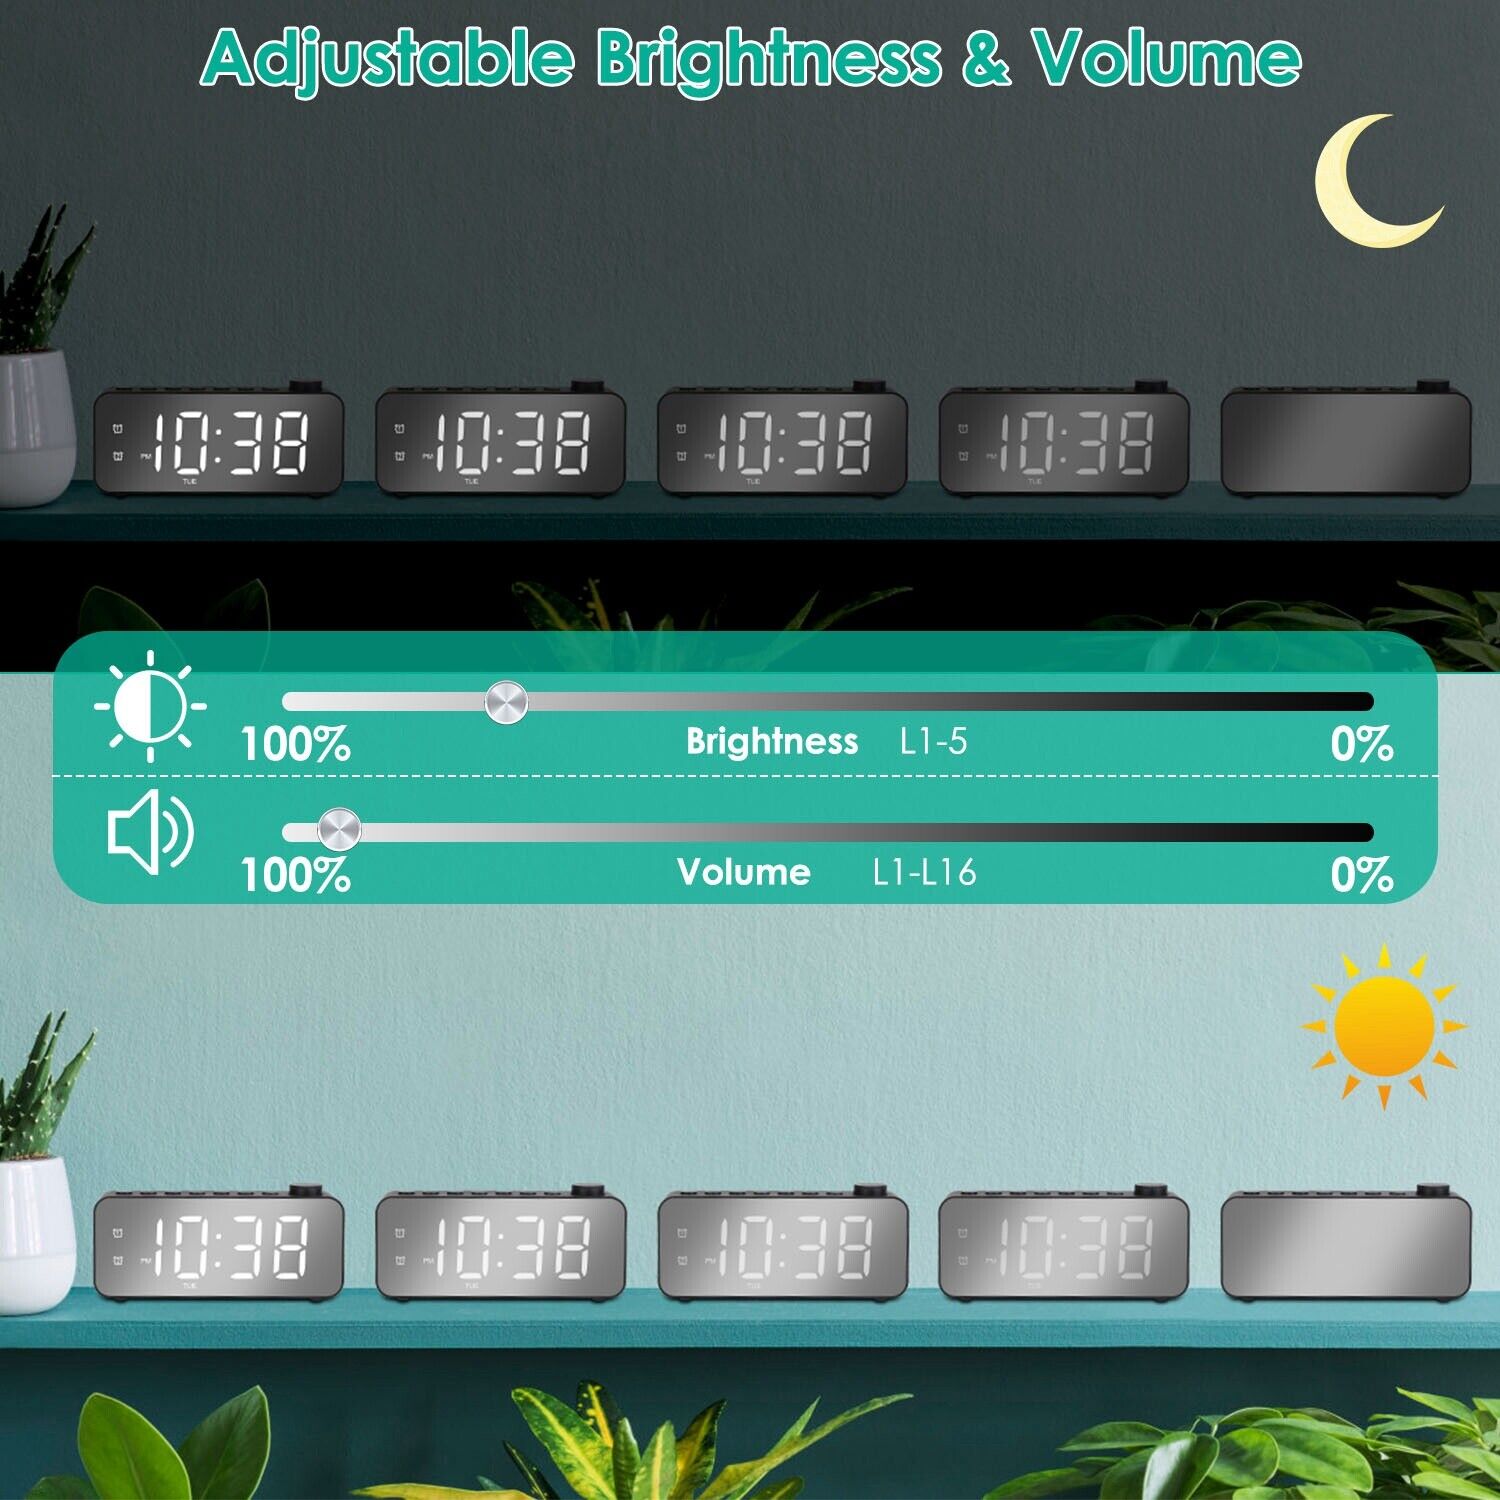 imountek 6" Digital Electric Alarm Clock RGB Color LED 3 Alarm Timer FM Radio Snooze USB